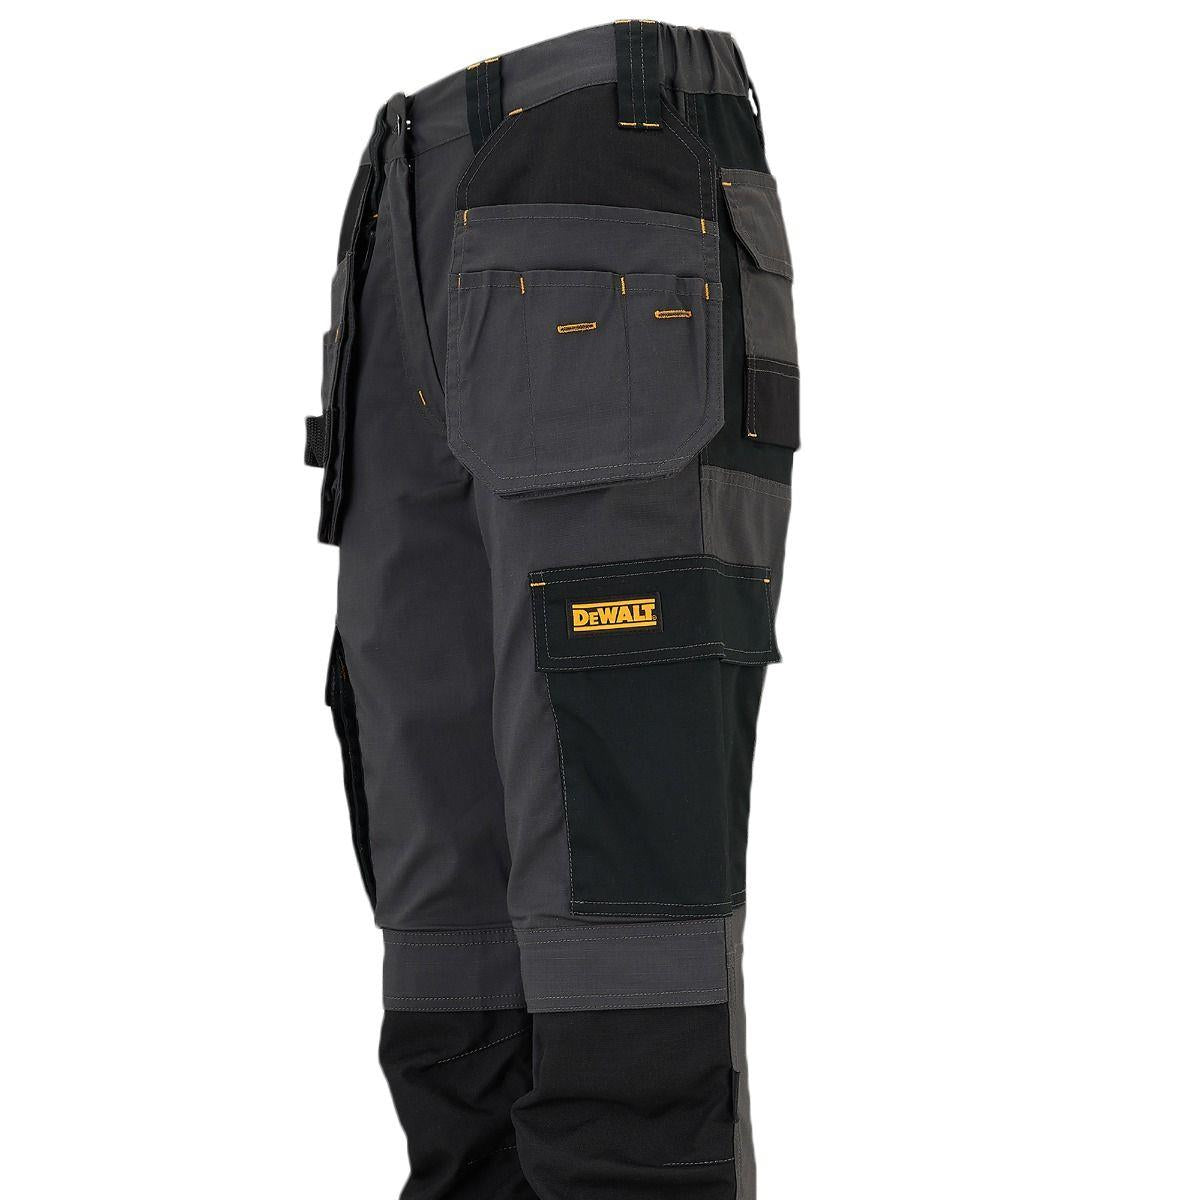 DeWalt Roseville grey/black ladies holster cargo slim fit stretch work trousers